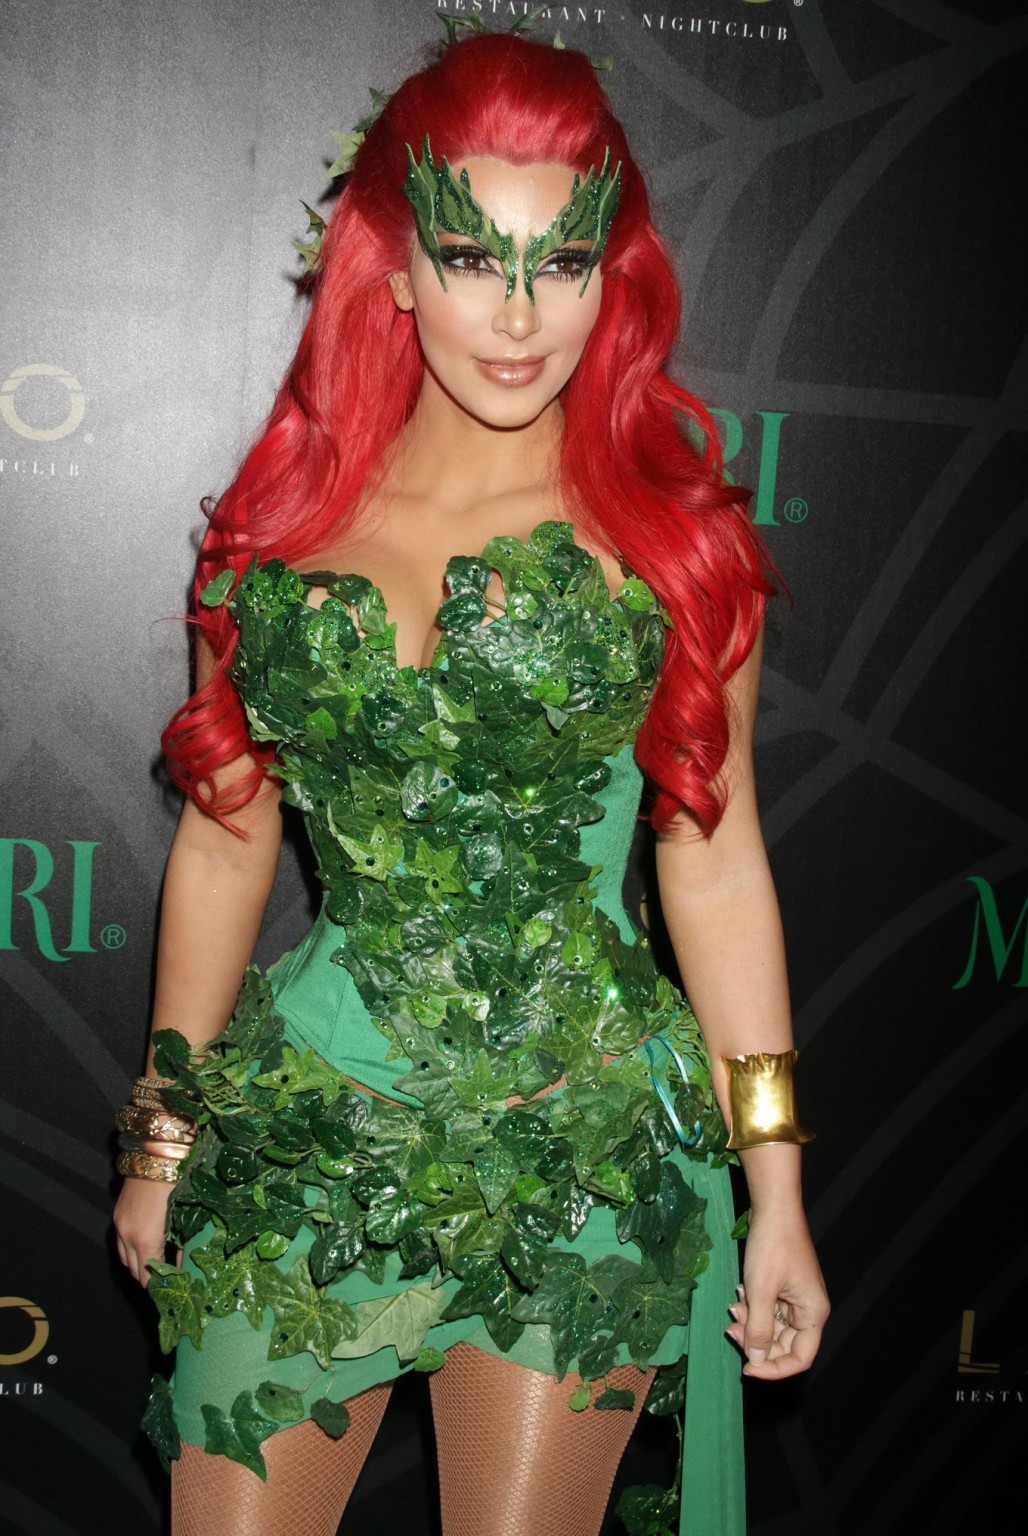 Kim kardashian vollbusig bei grüner midory halloween party in las vegas
 #75283736